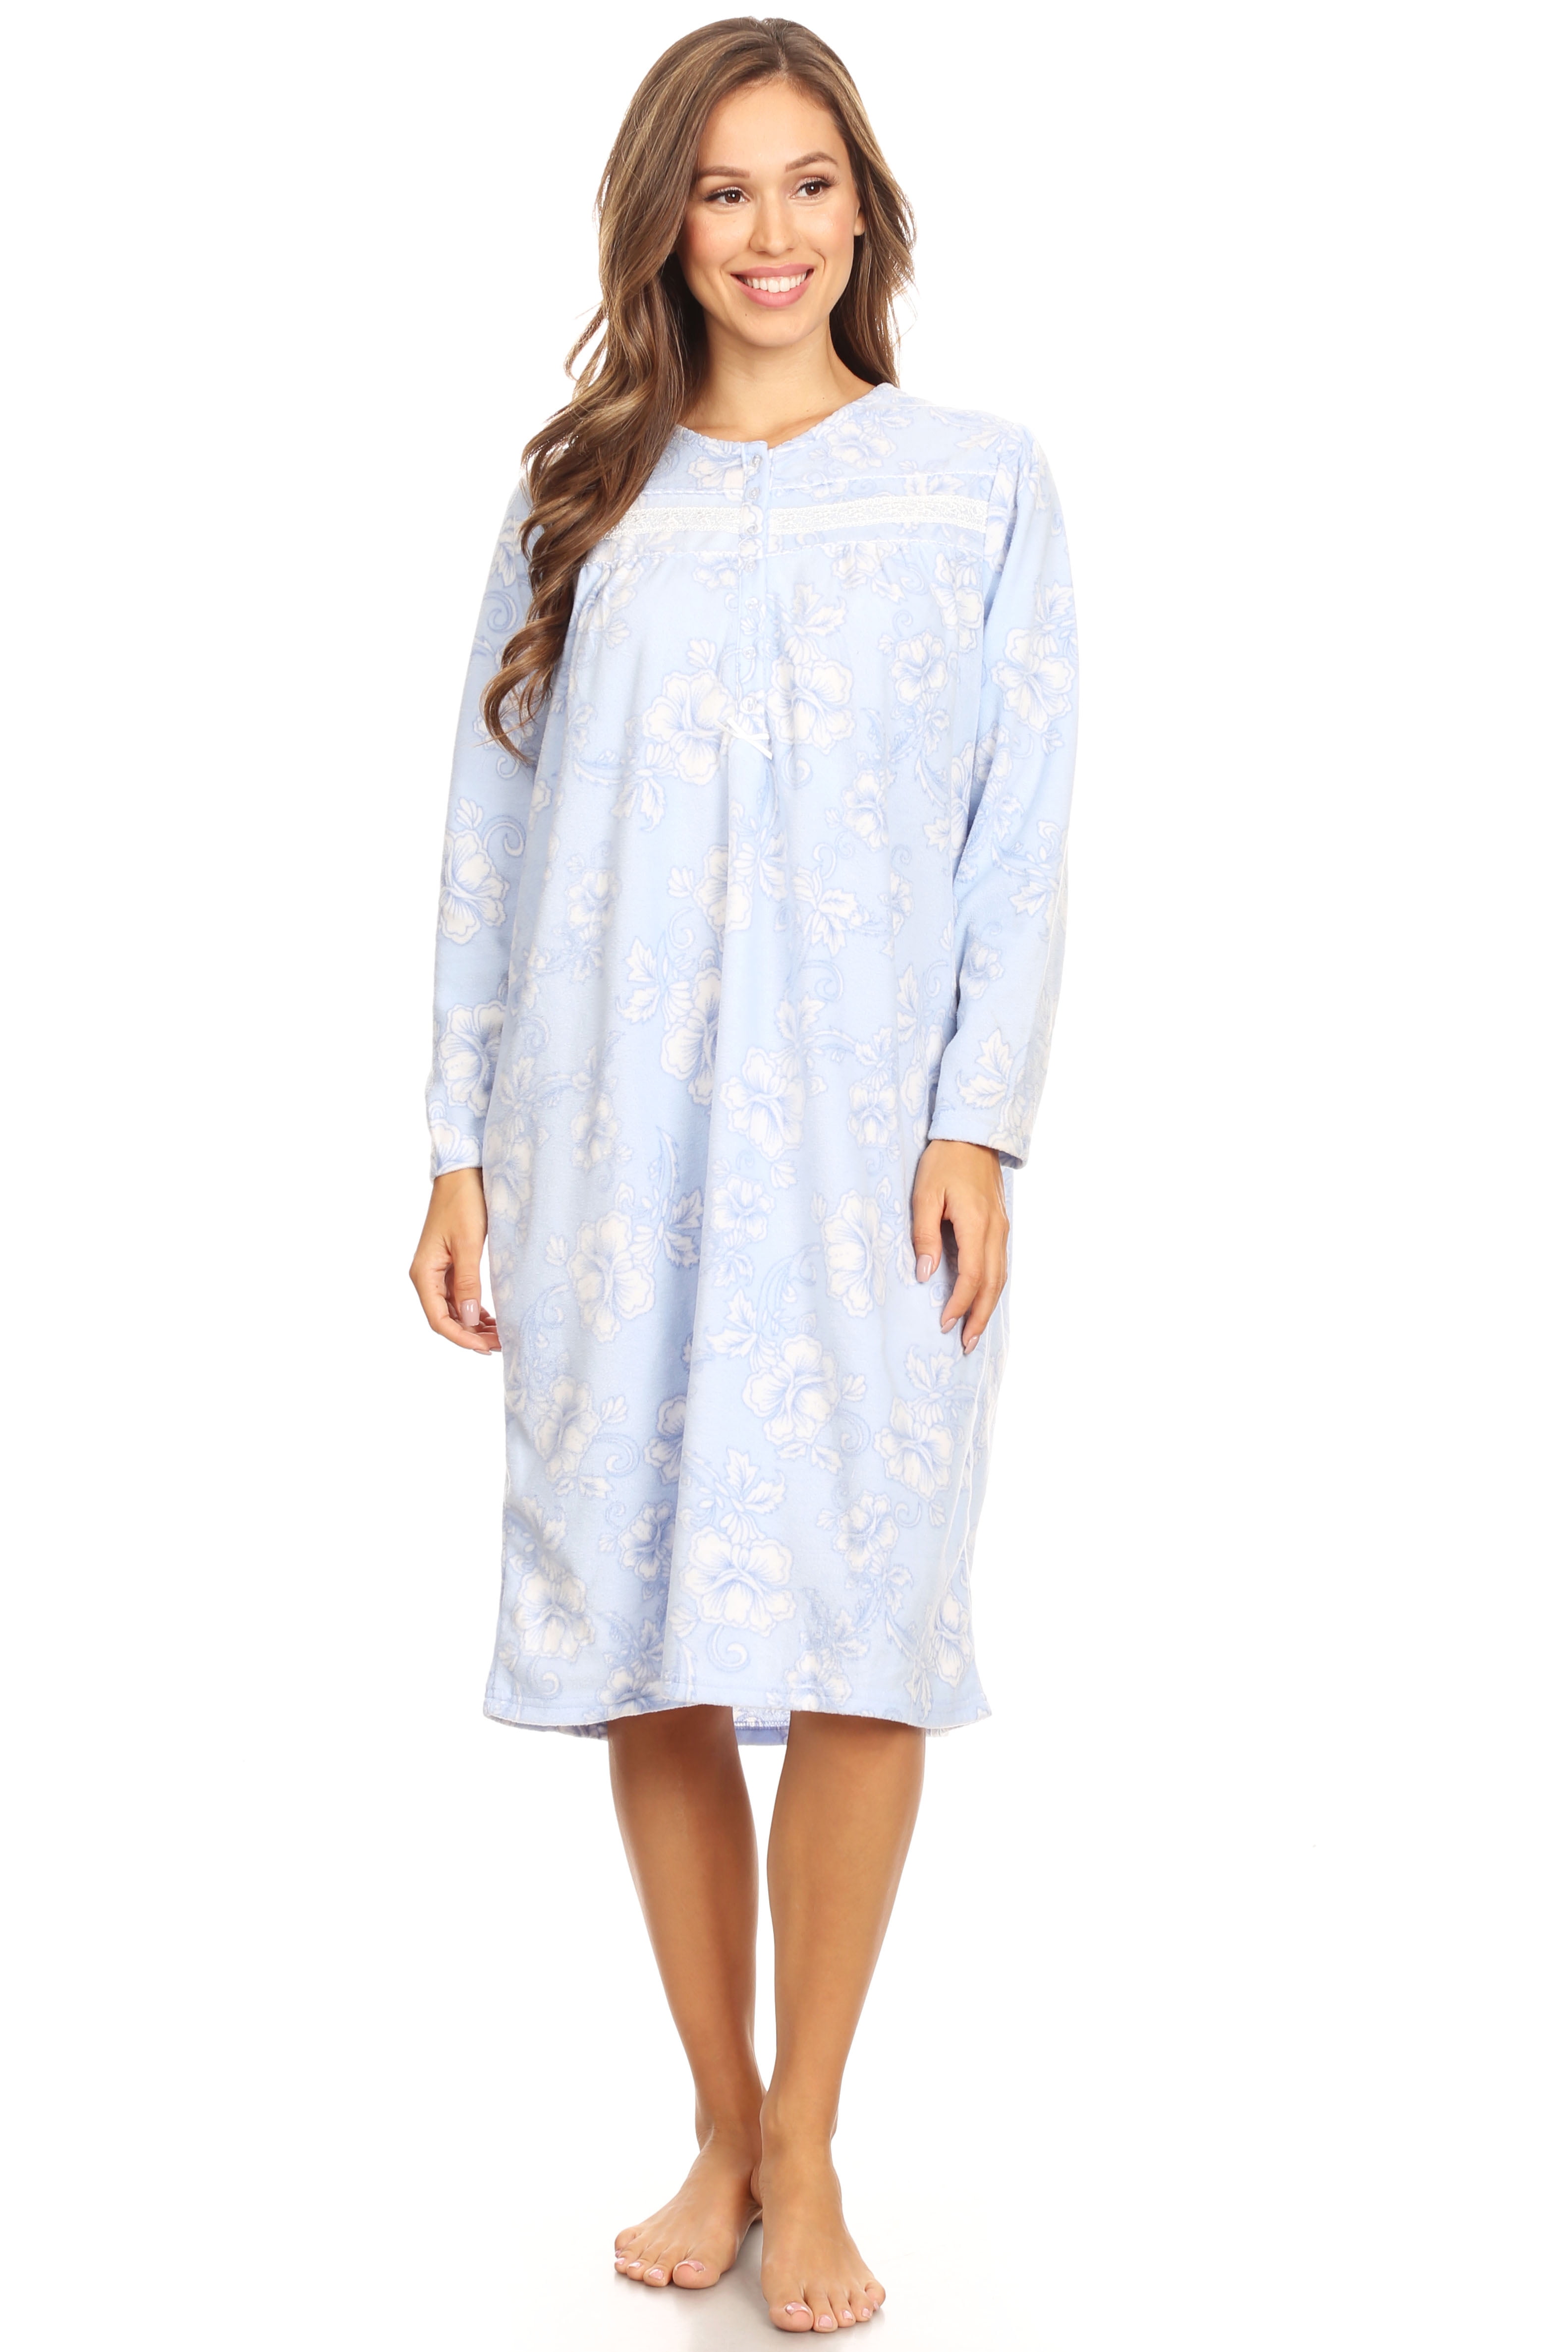 4026 Fleece Womens Nightgown Sleepwear Pajamas Woman Long Sleeve Sleep ...